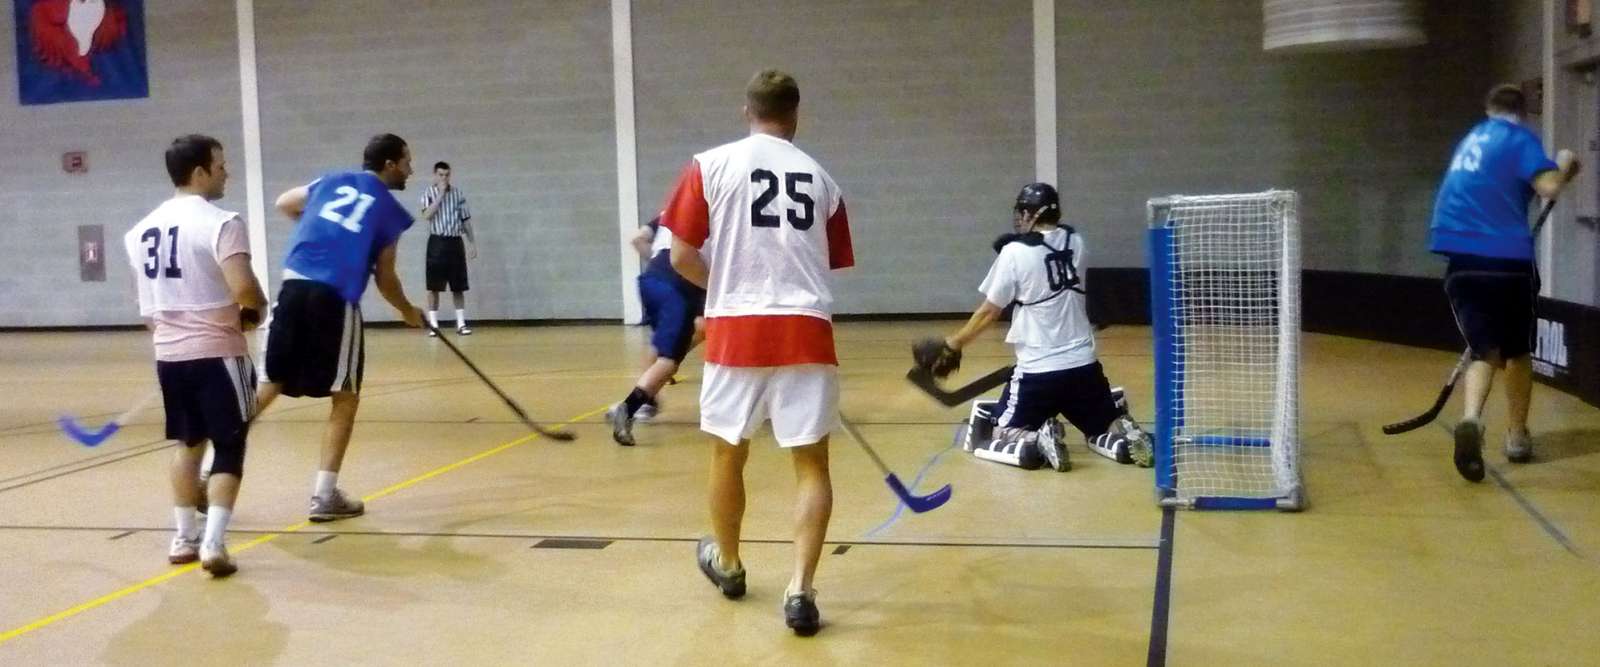 Recreational Sports: Floor Hockey